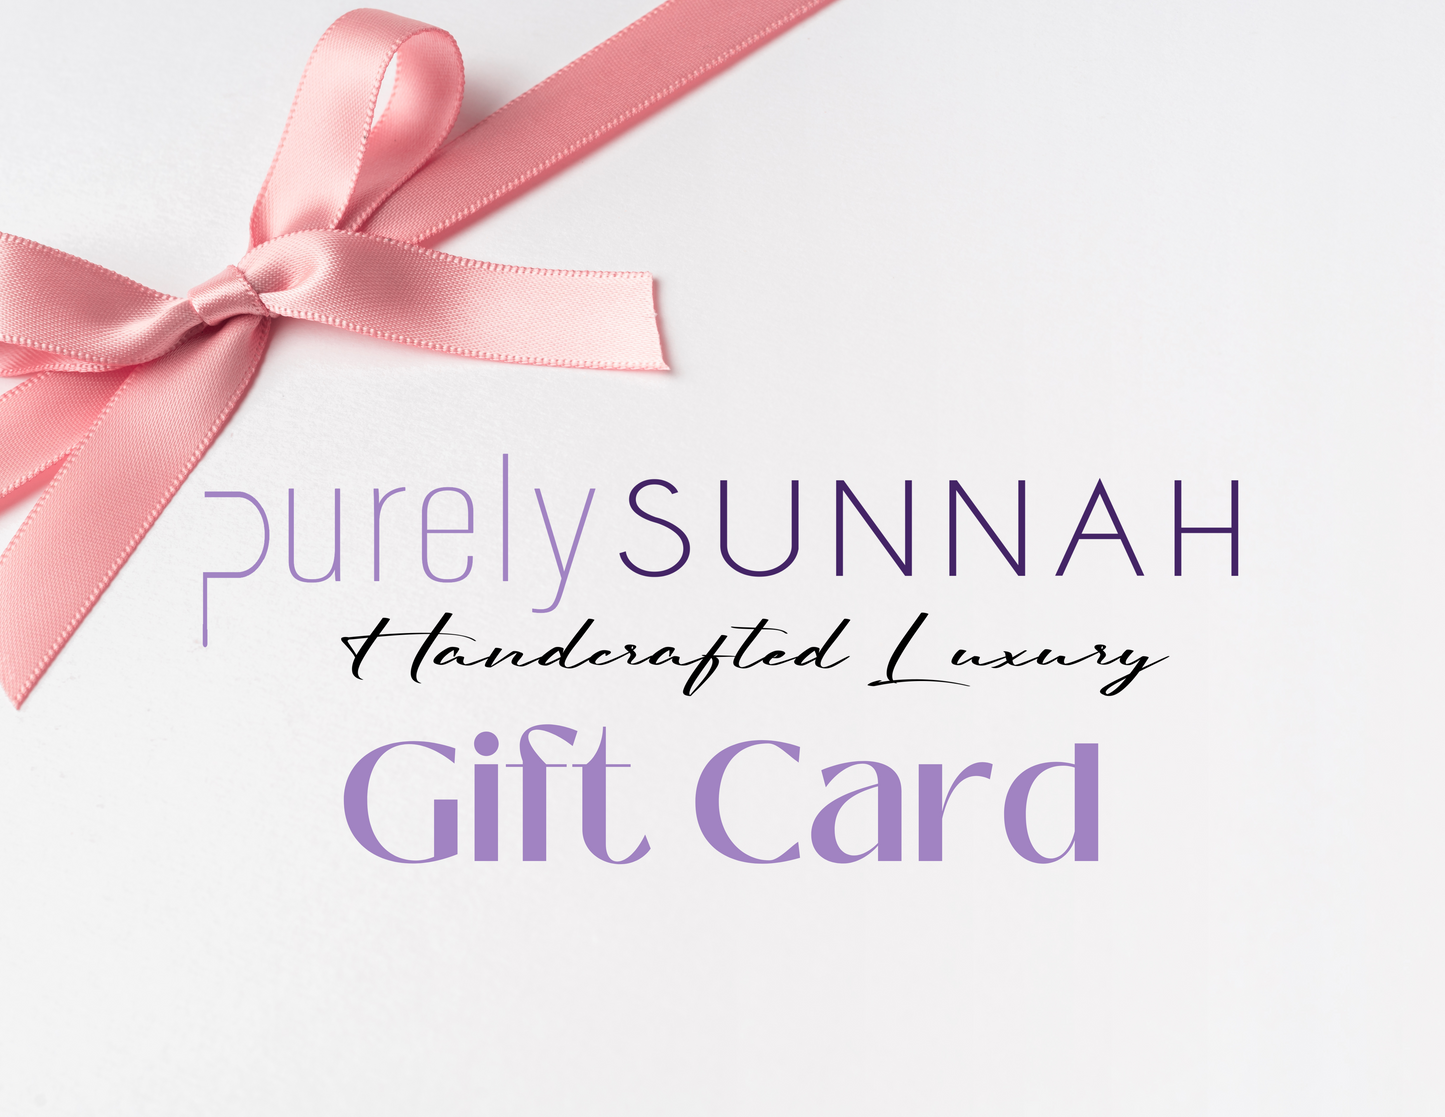 Purely Sunnah Gift Card